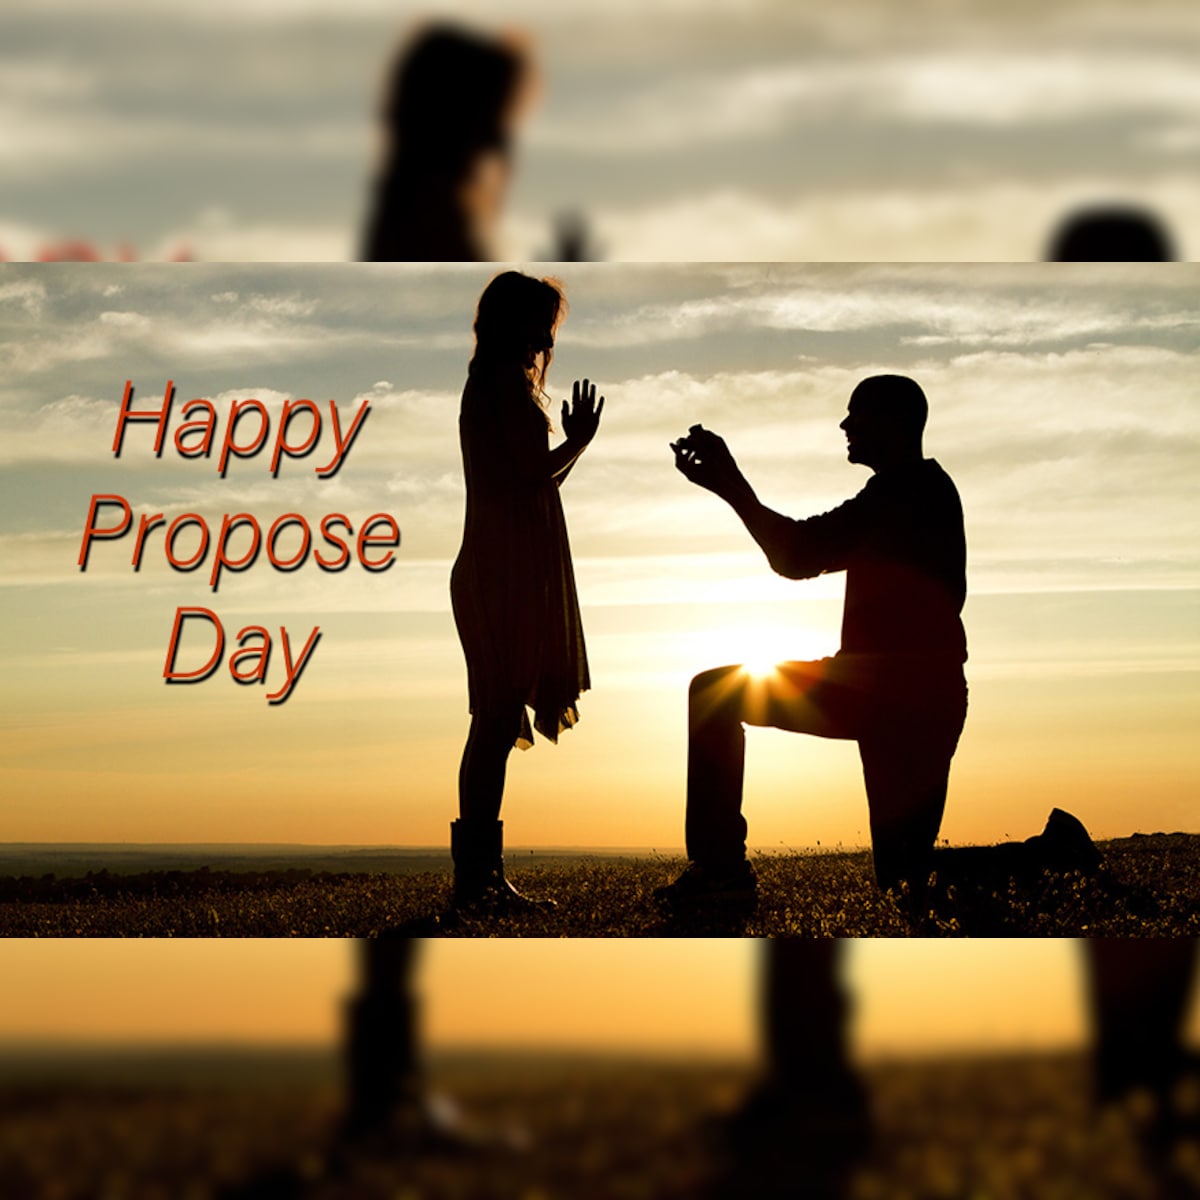 Happy propose day 2020 : இன்றே காதலை சொல்ல ...